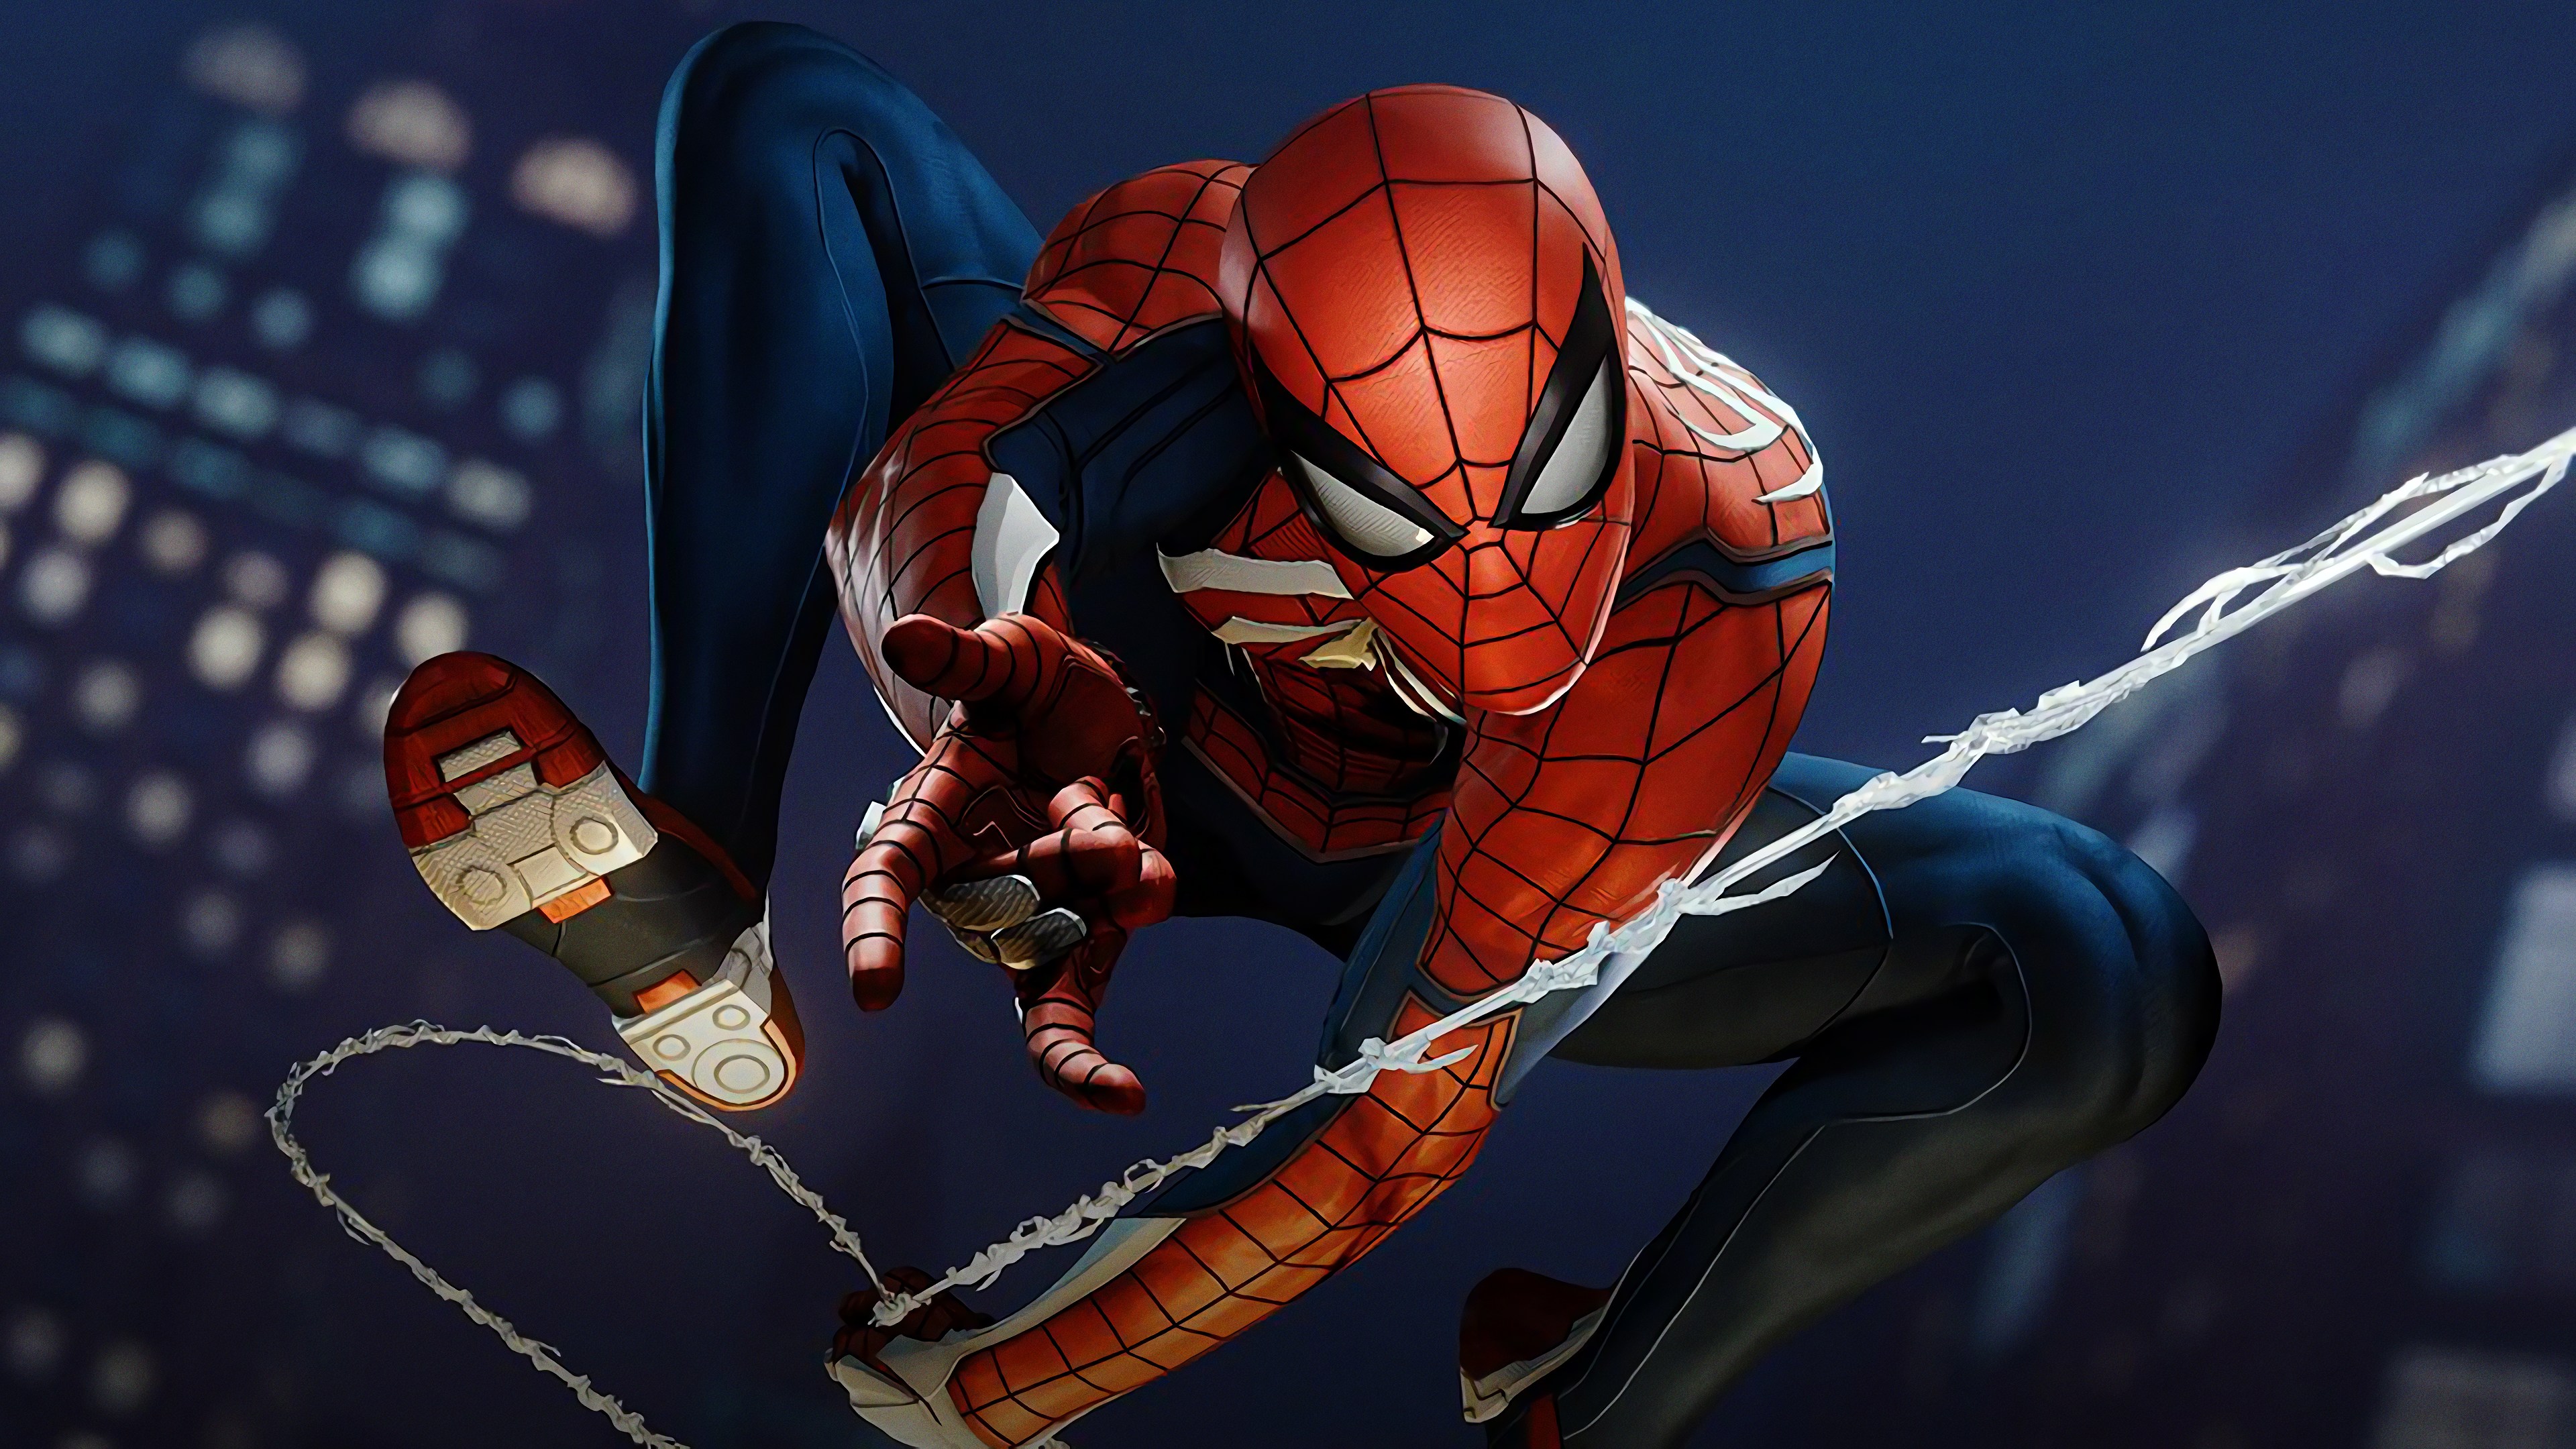 Spider Man (PS4) Man Web Swing 4k Ultra HD